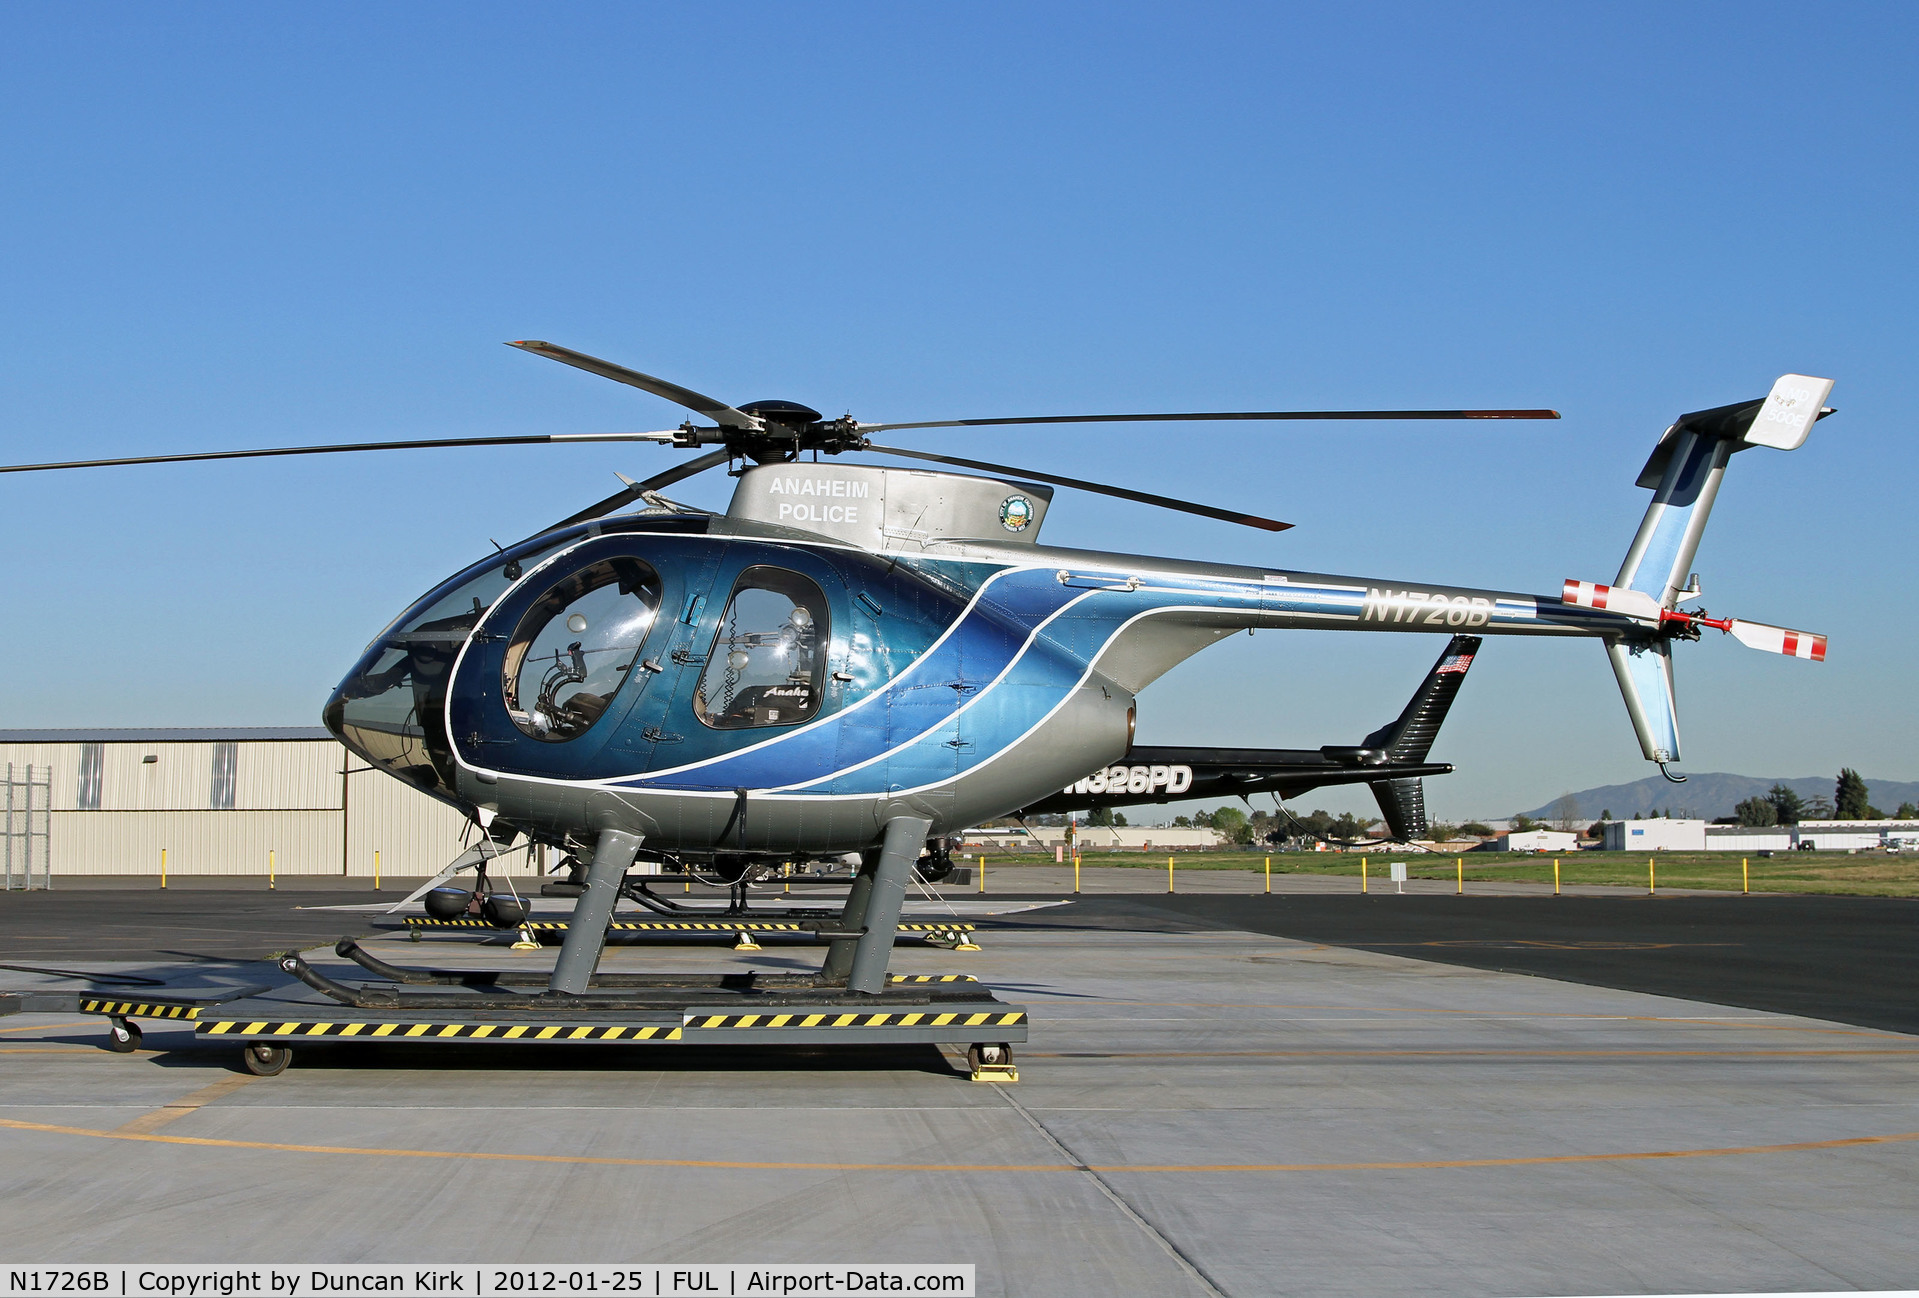 N1726B, 2000 MD Helicopters 369E C/N 0551E, Anaheim Police Dept chopper